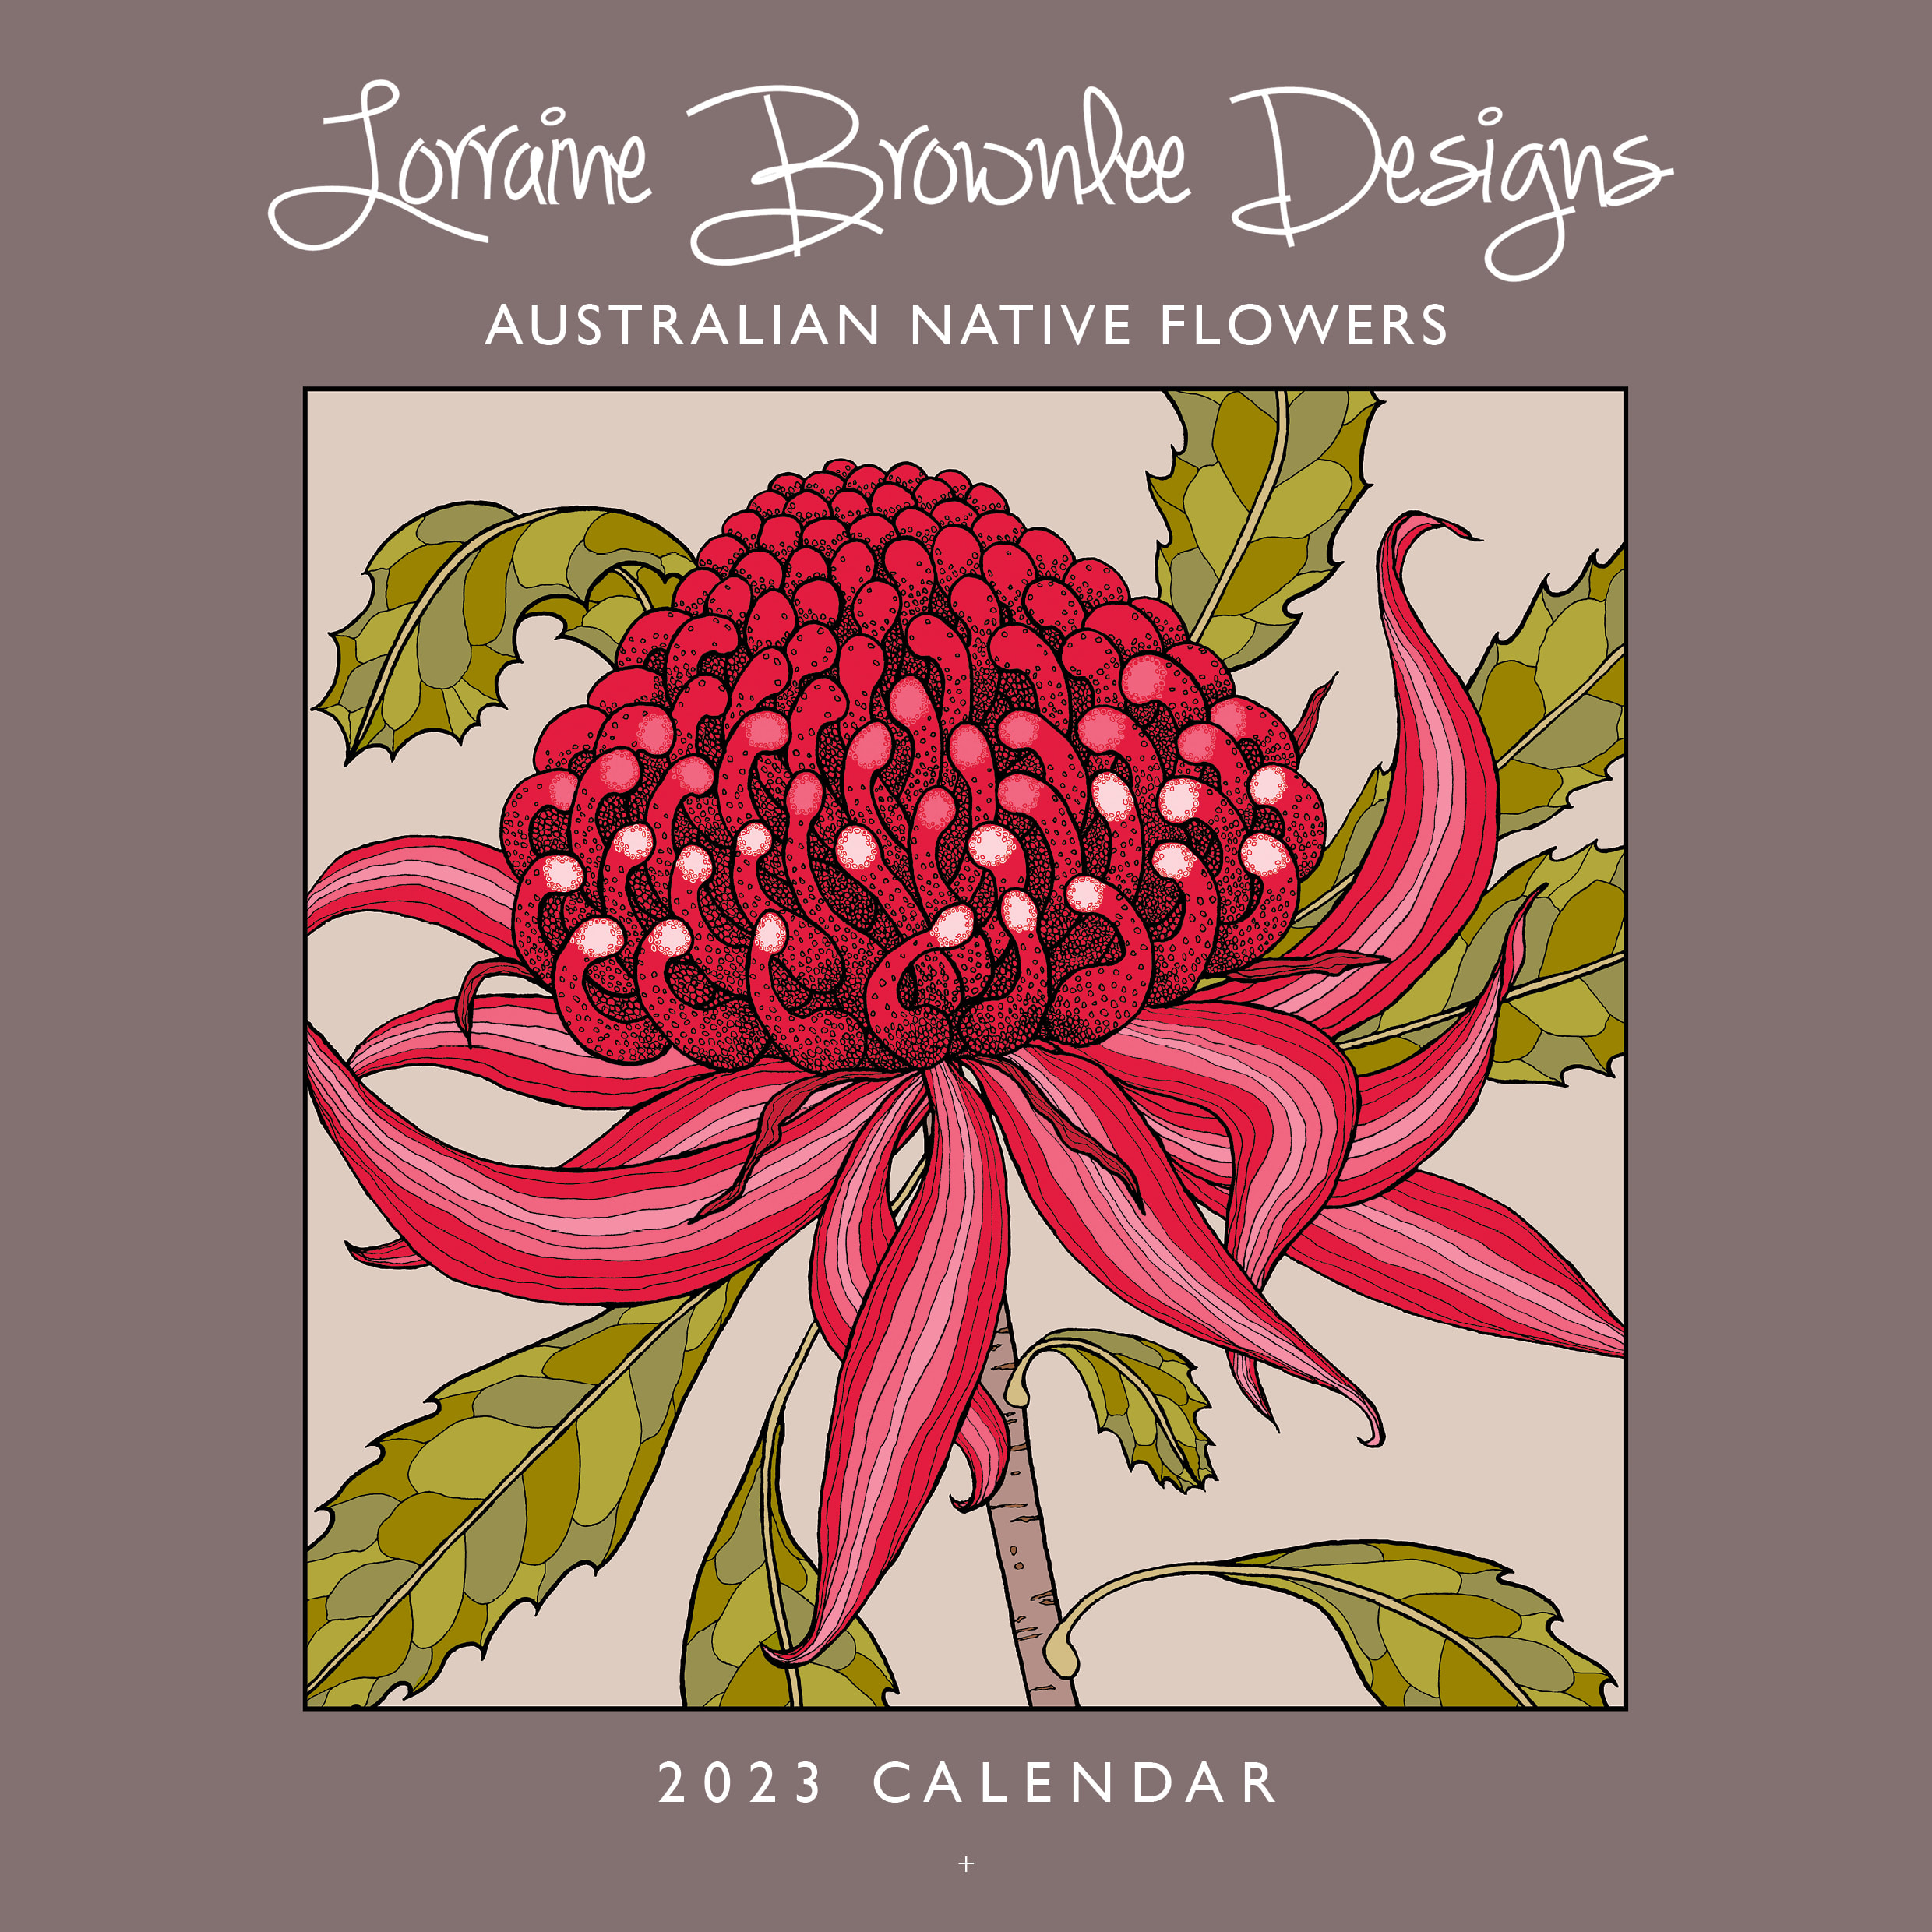 2023 Native Plant Calendar designed by Lorraine Brownlee